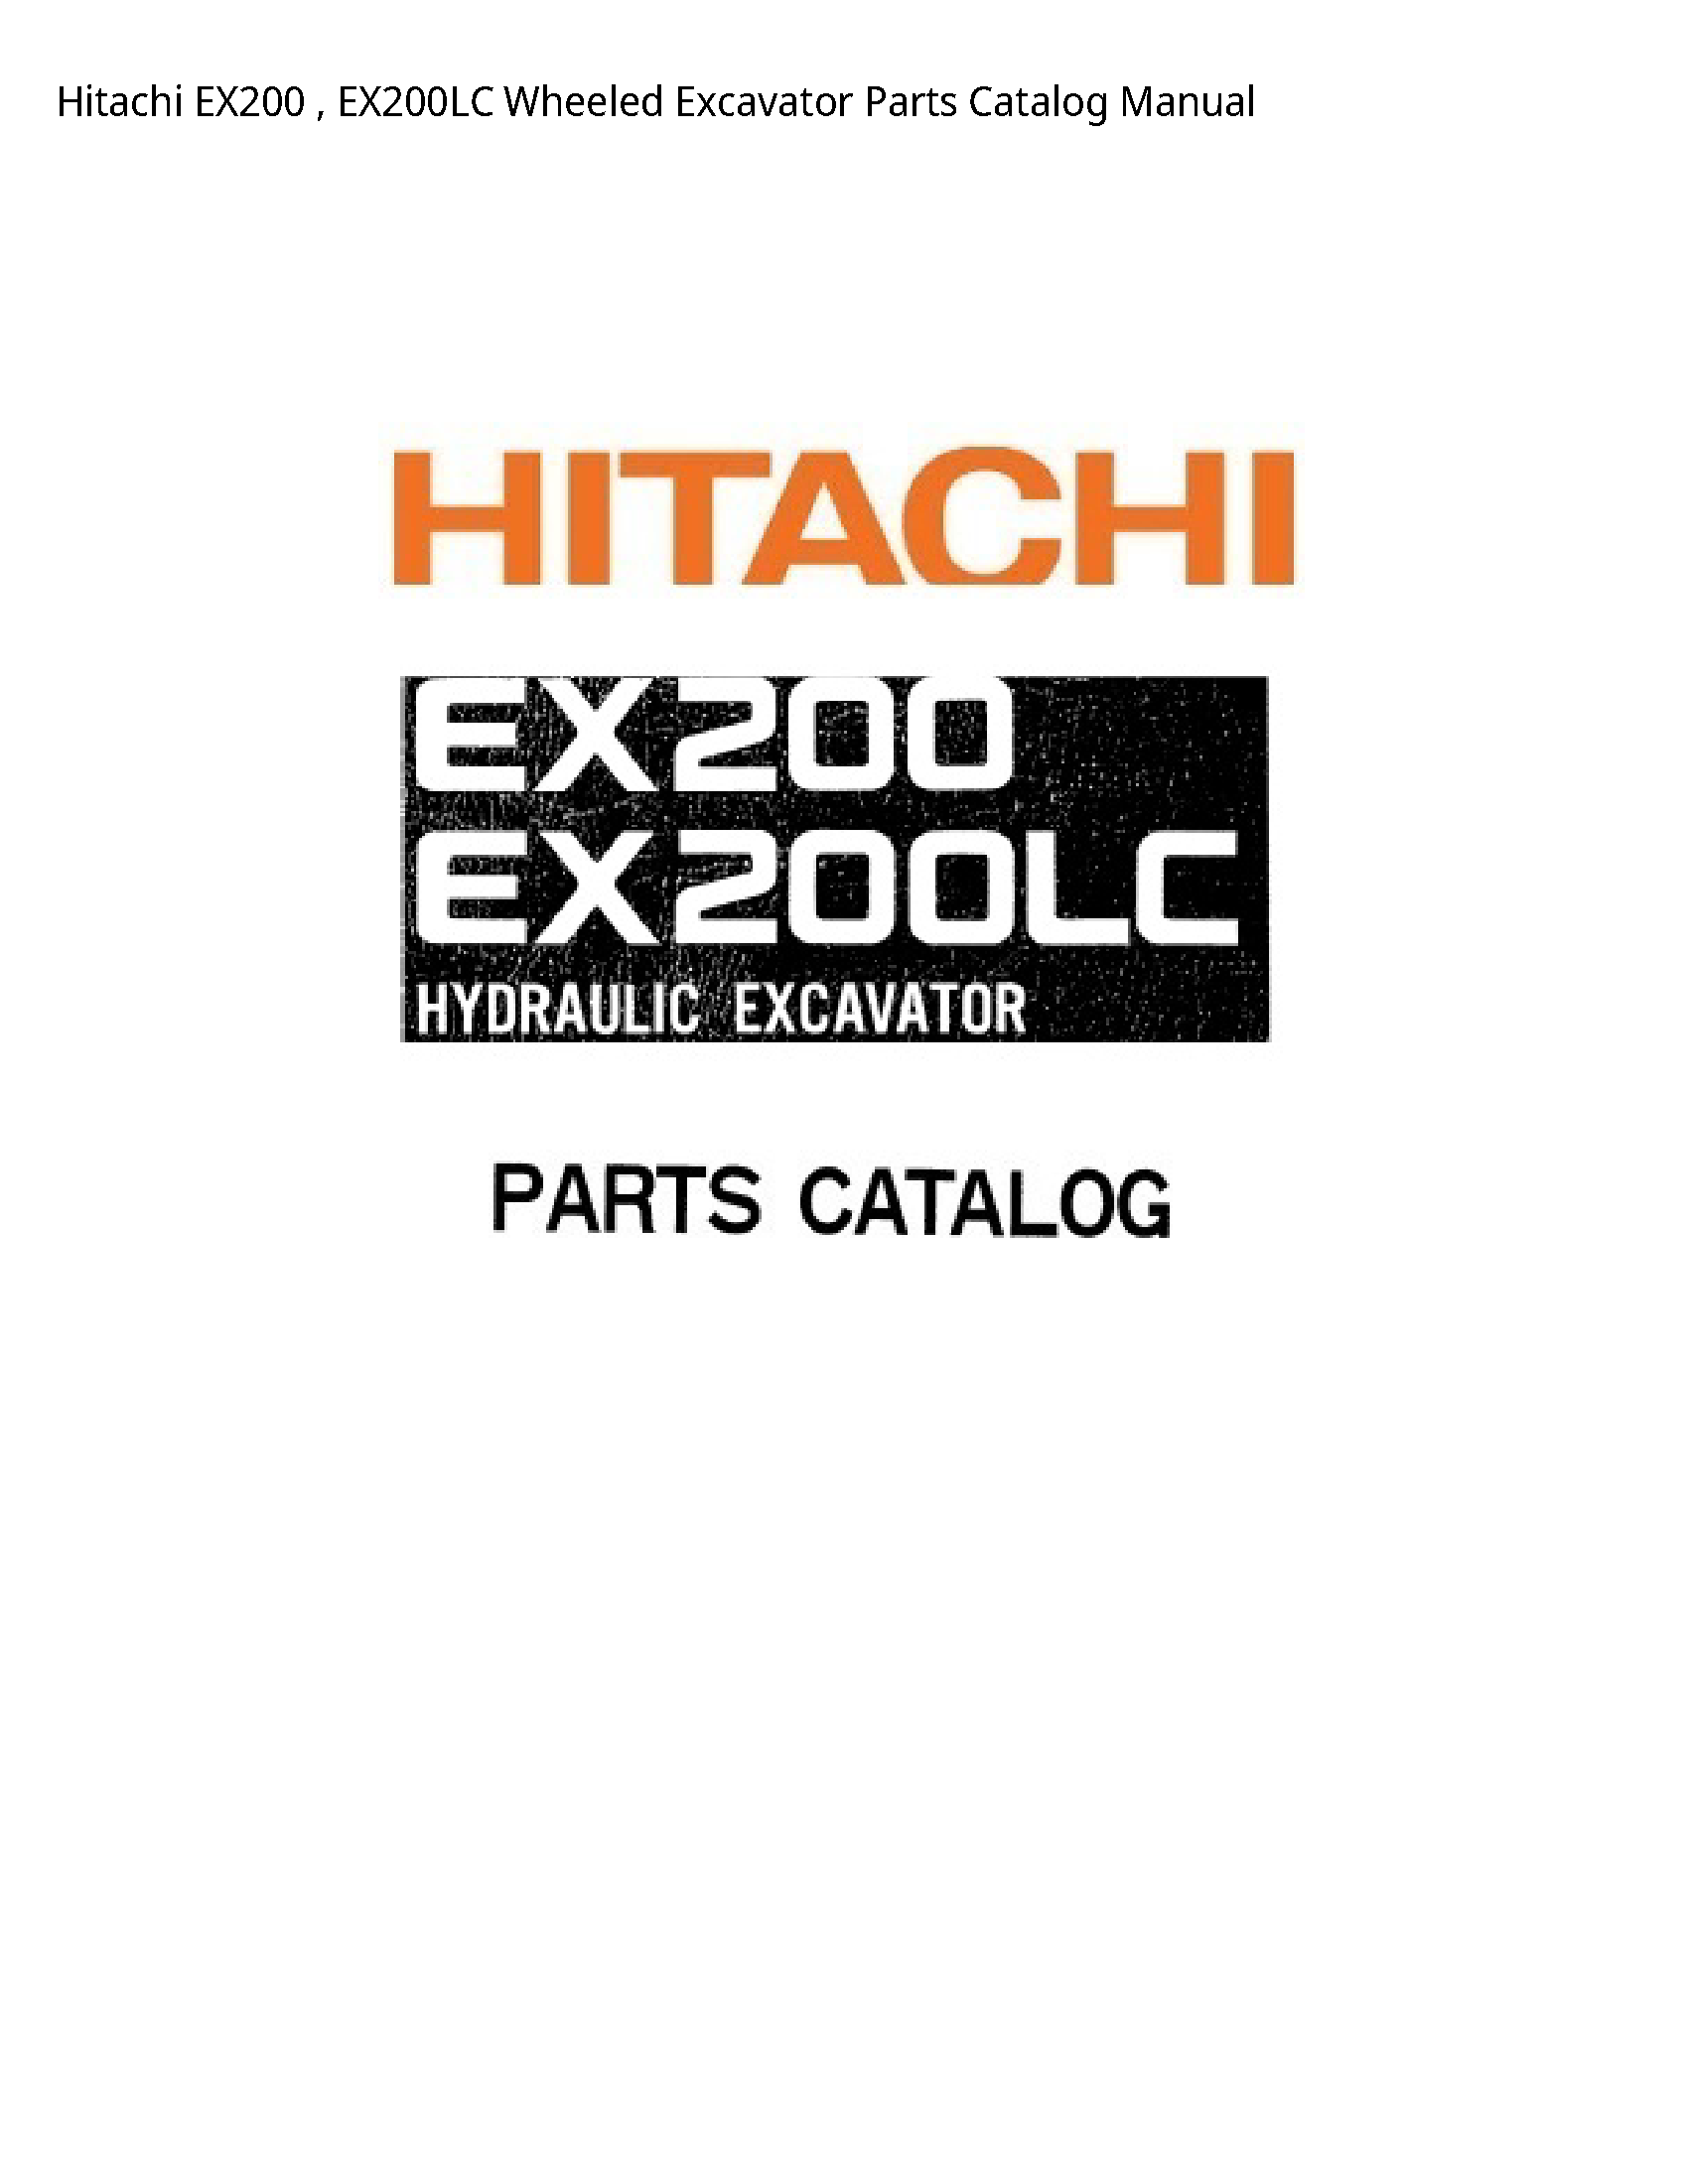 Hitachi EX200 Wheeled Excavator Parts Catalog manual